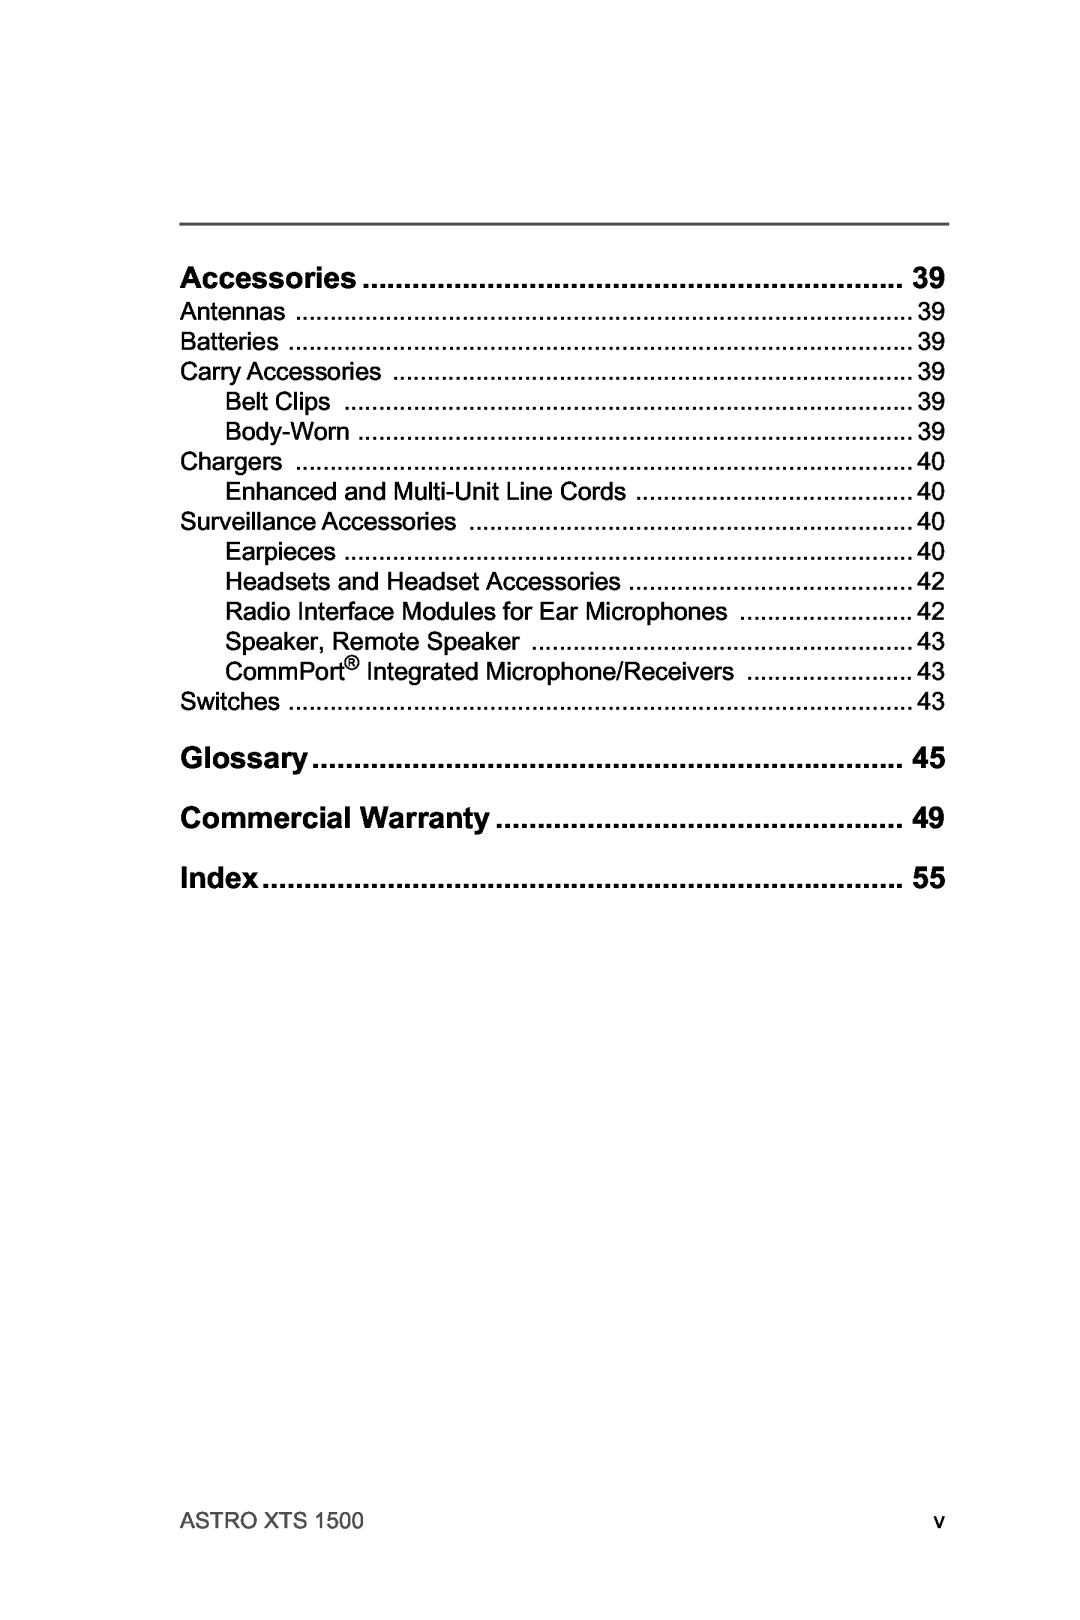 Motorola XTSTM 1500 manual Accessories, Glossary, Commercial Warranty, Index, Astro Xts 